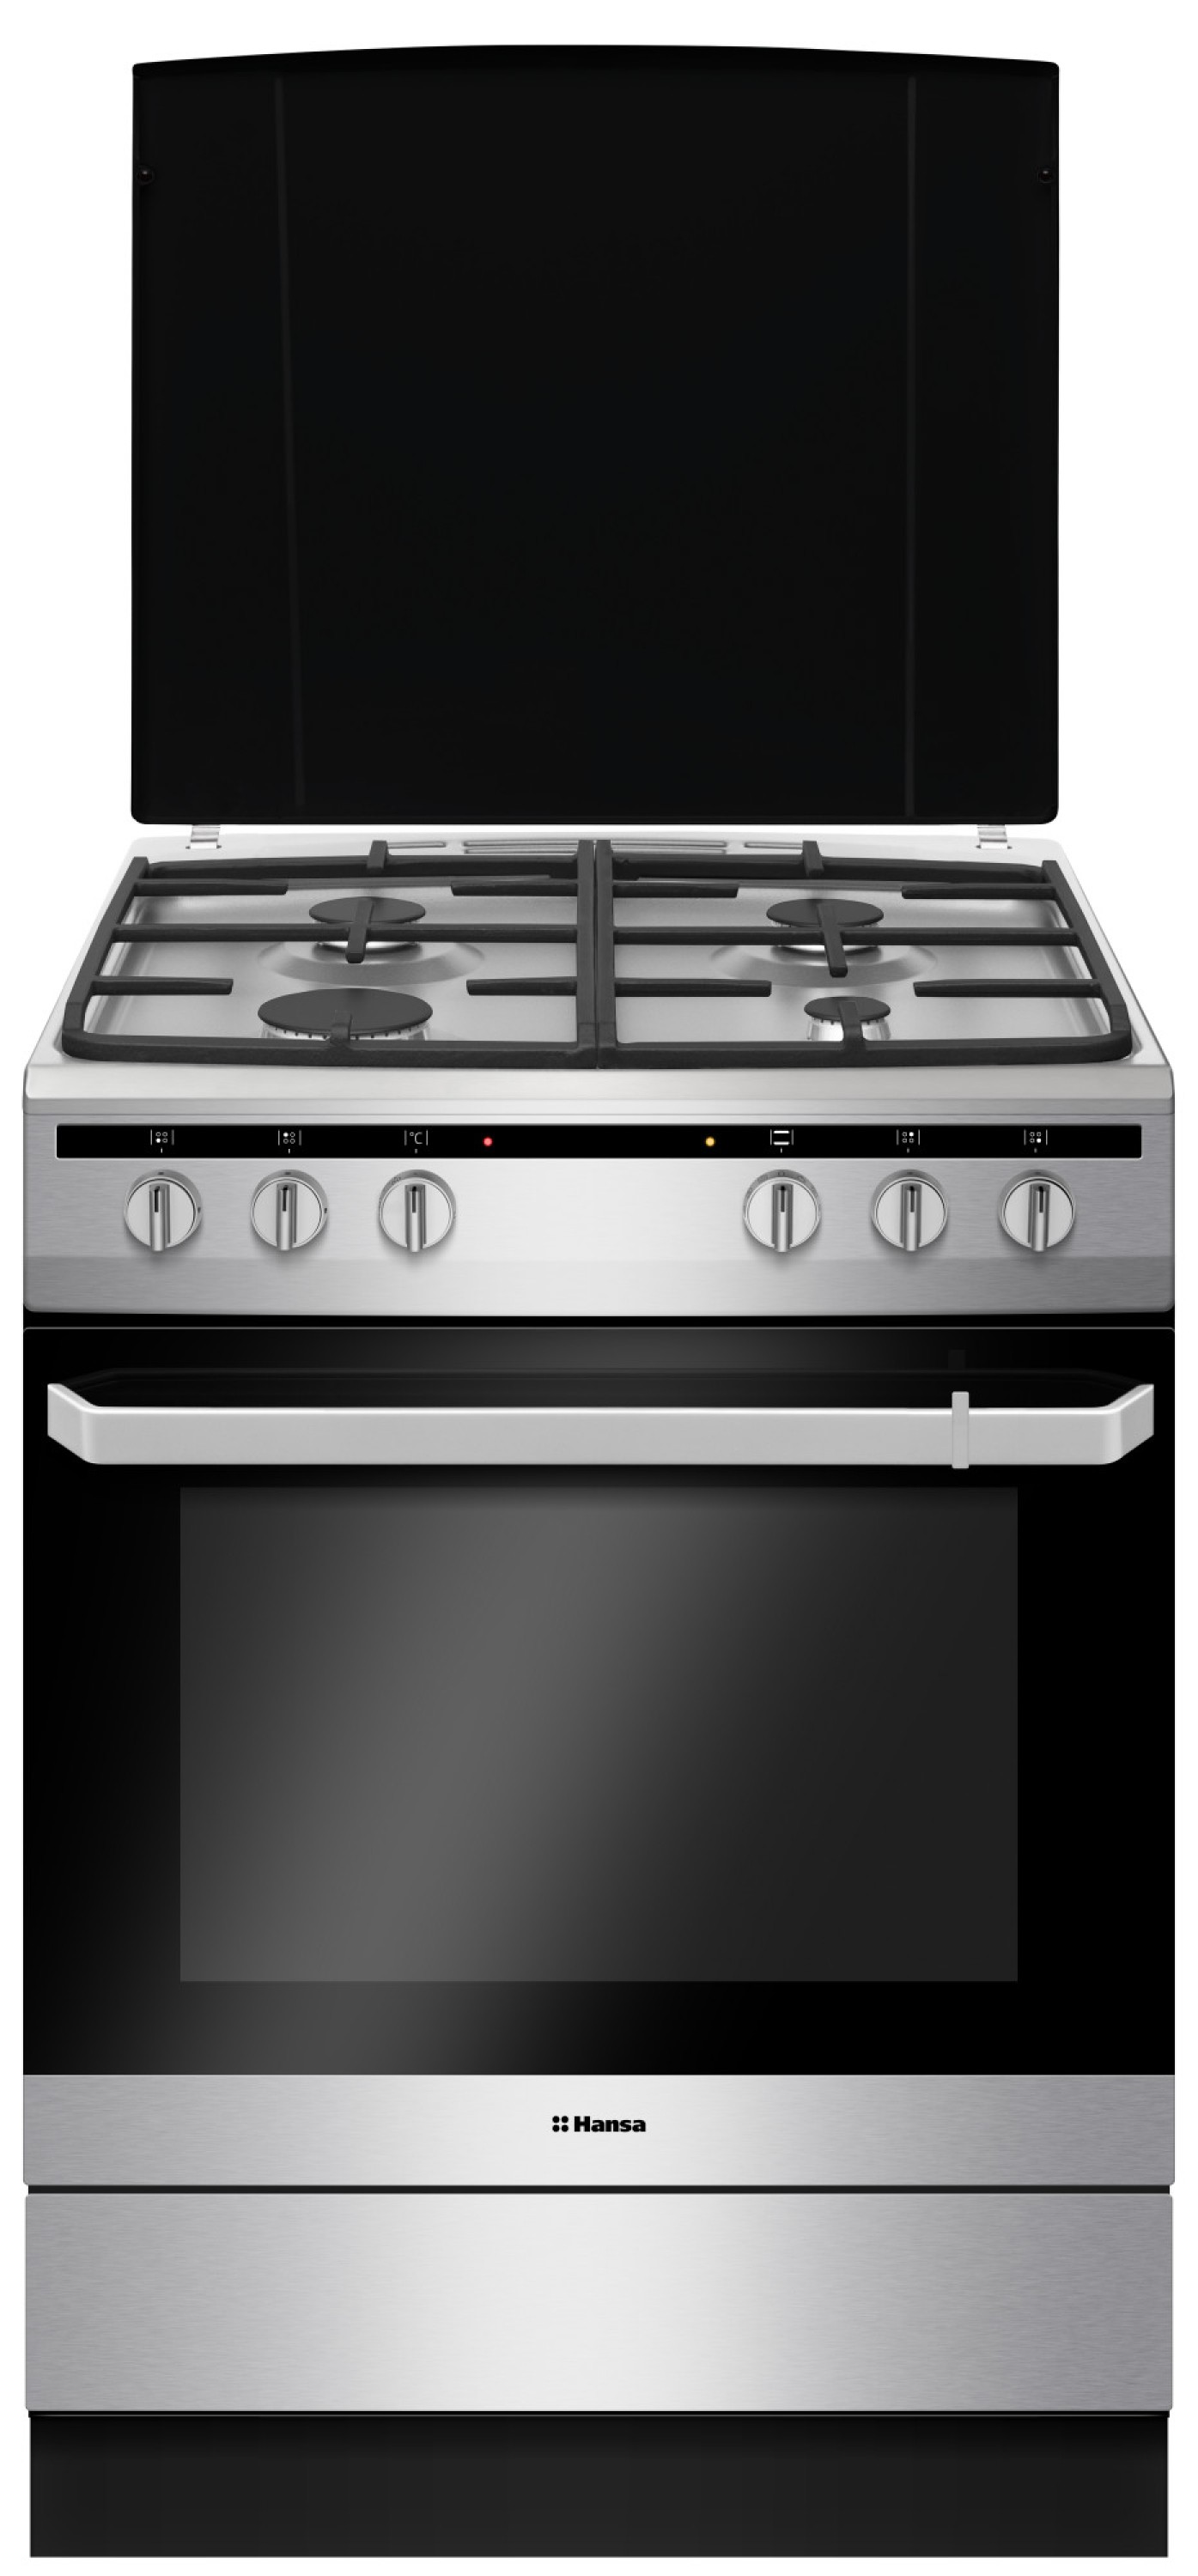 Кухонная плита Hansa FCMX680201 цена 16549 грн - фотография 2